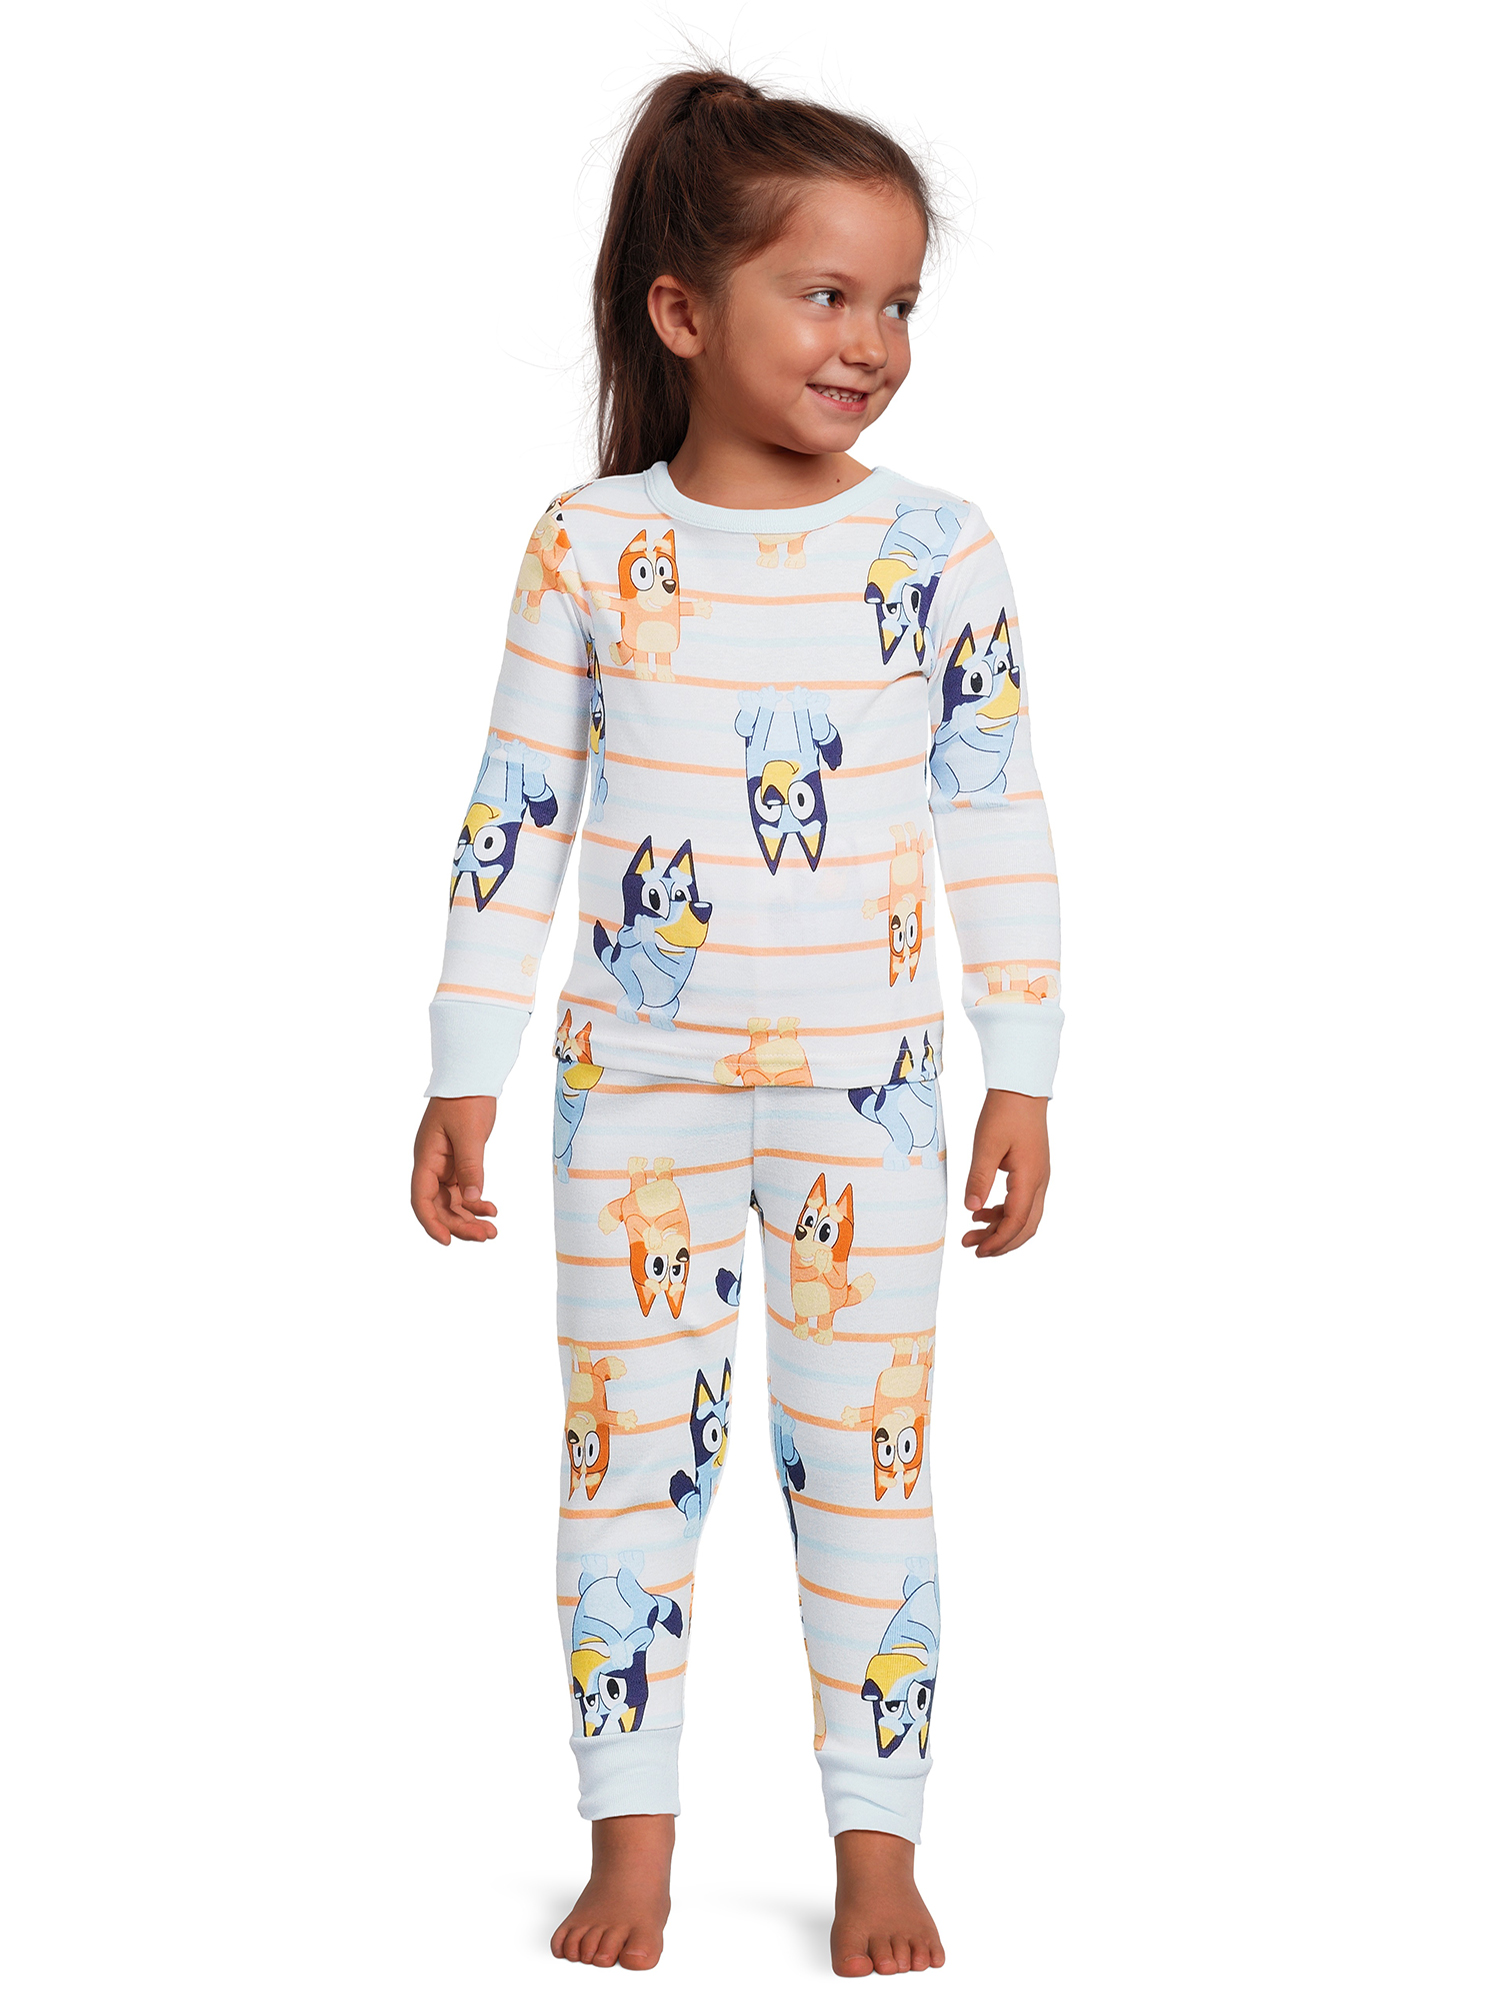 Bluey Toddler Unisex Long Sleeve Top and Pants, 2-Piece Pajama Set, Sizes 12M-5T - image 2 of 9